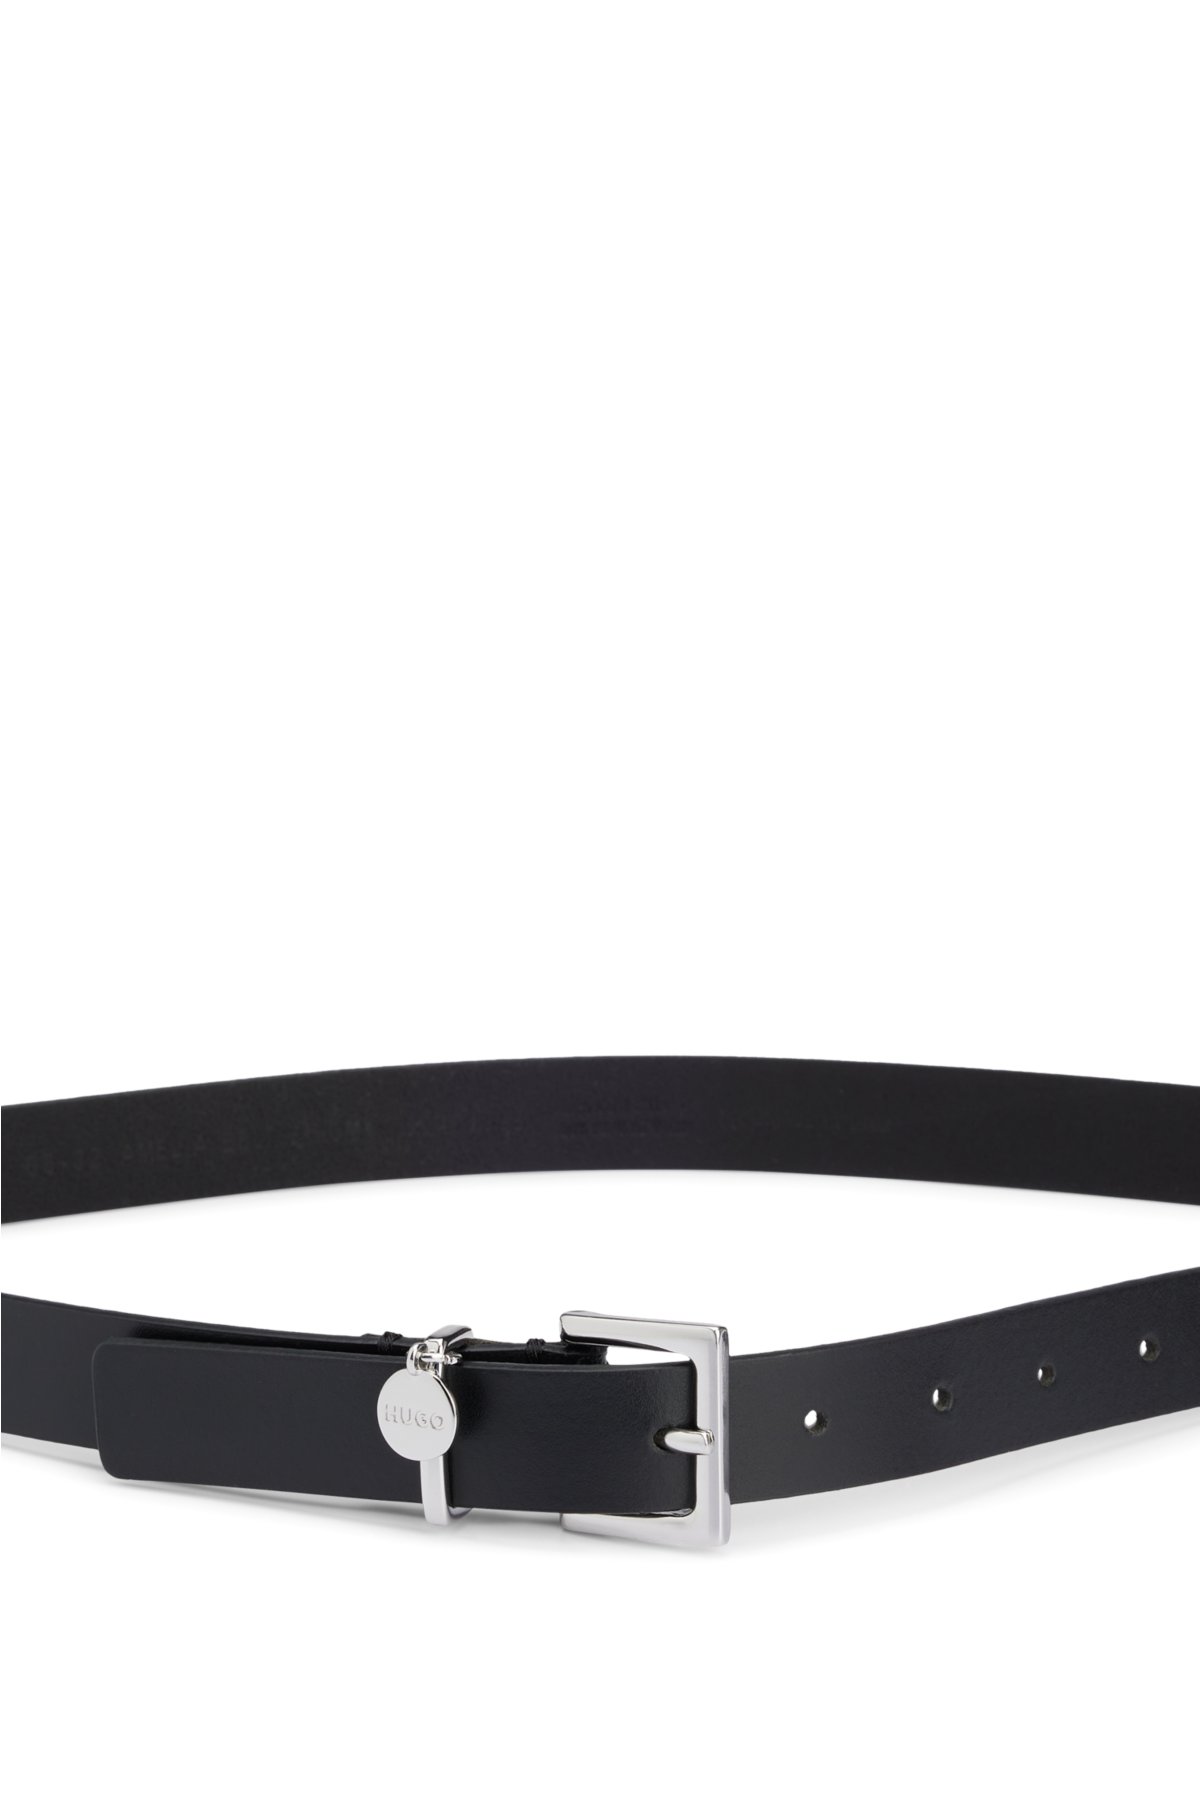 Italian-leather belt with logo-charm keeper, Black